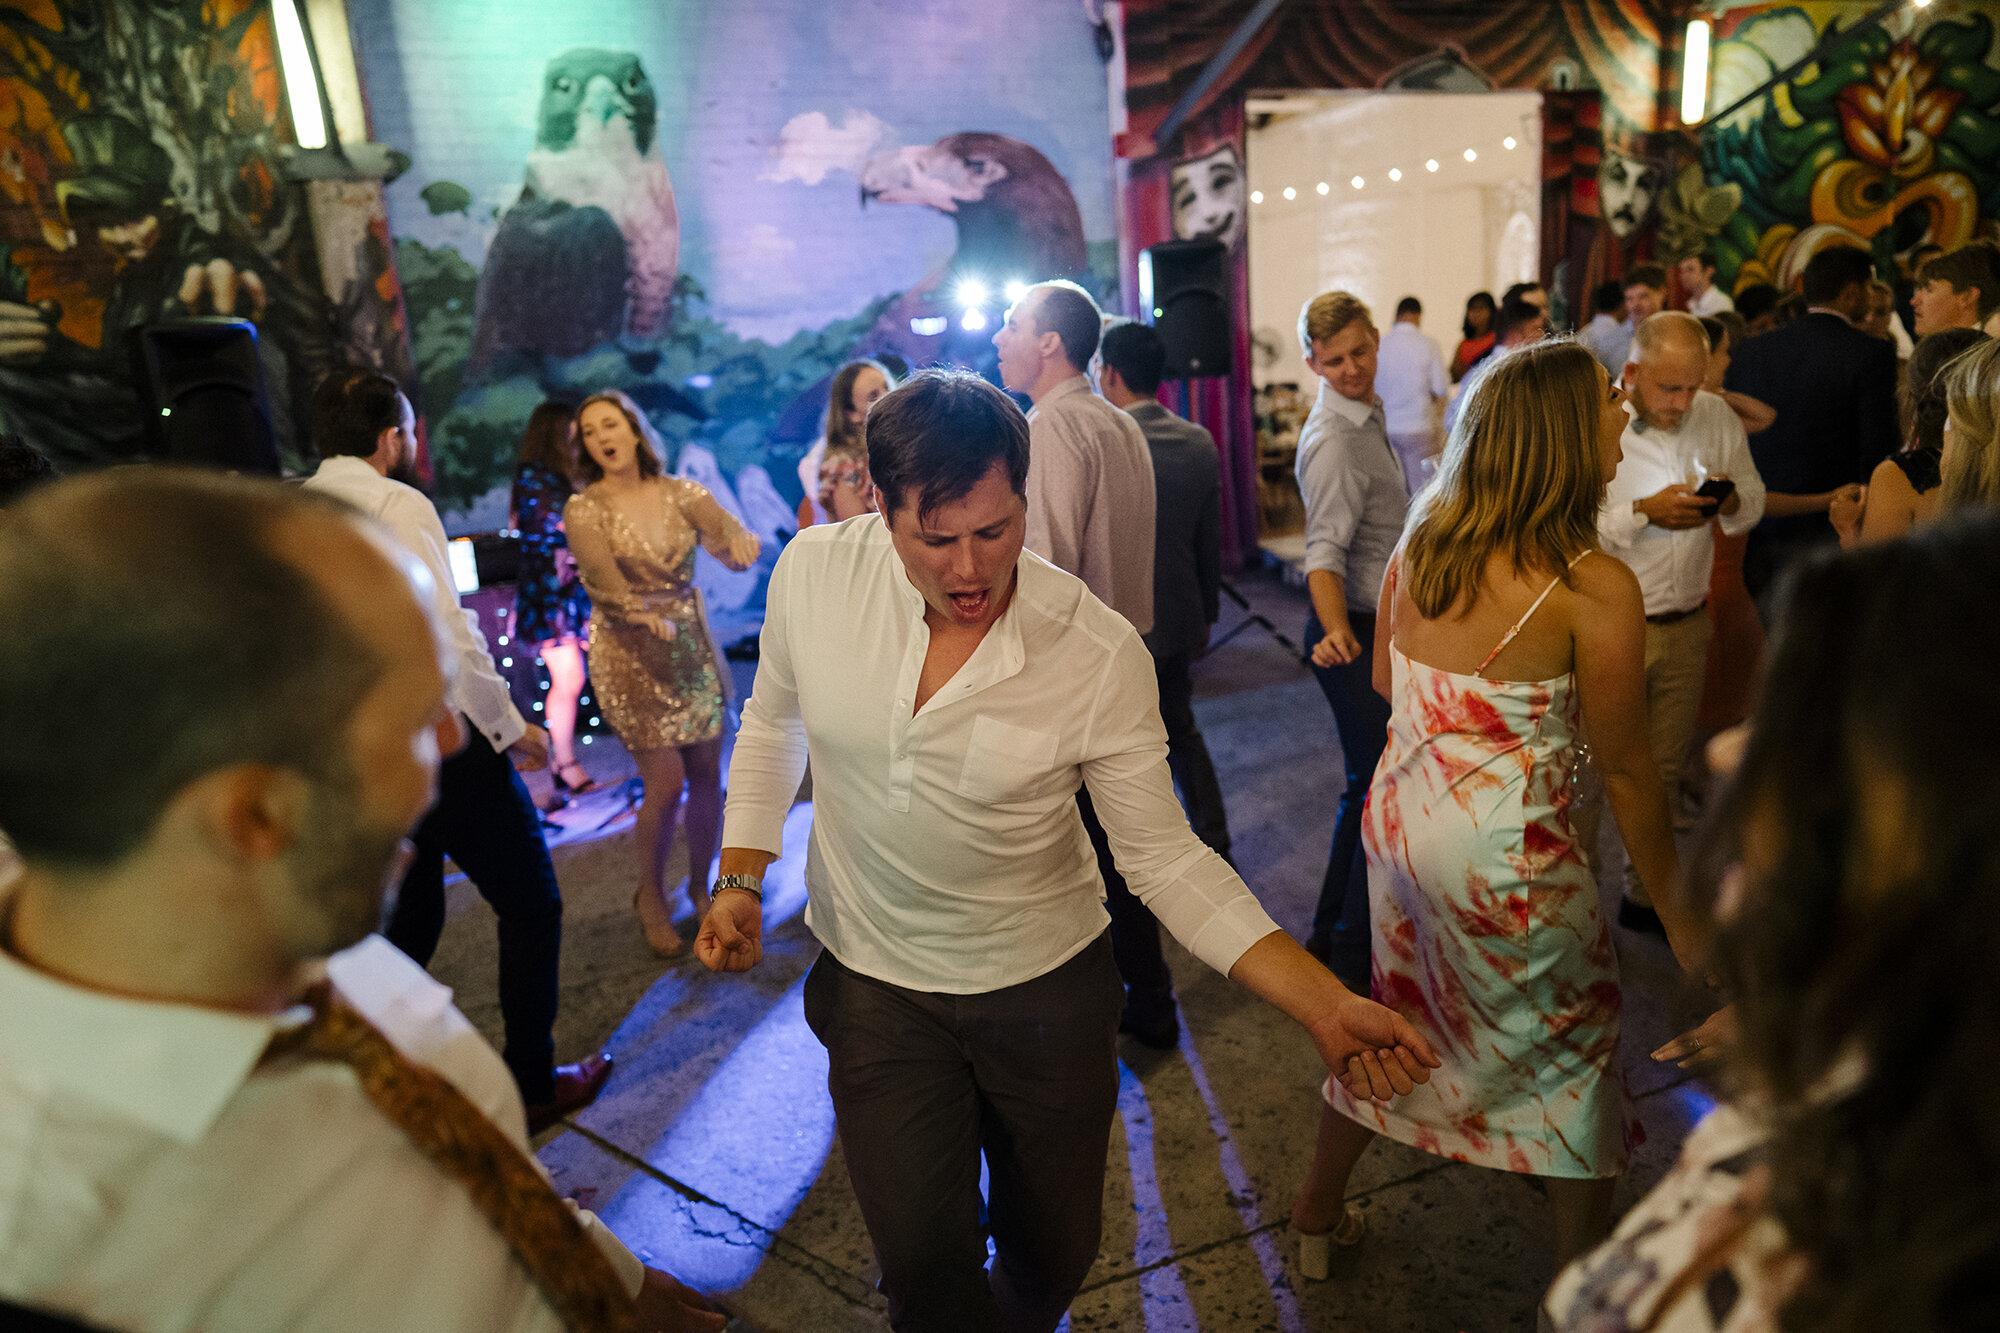 Perth City Farm Wedding | Dancefloor Fun Photo